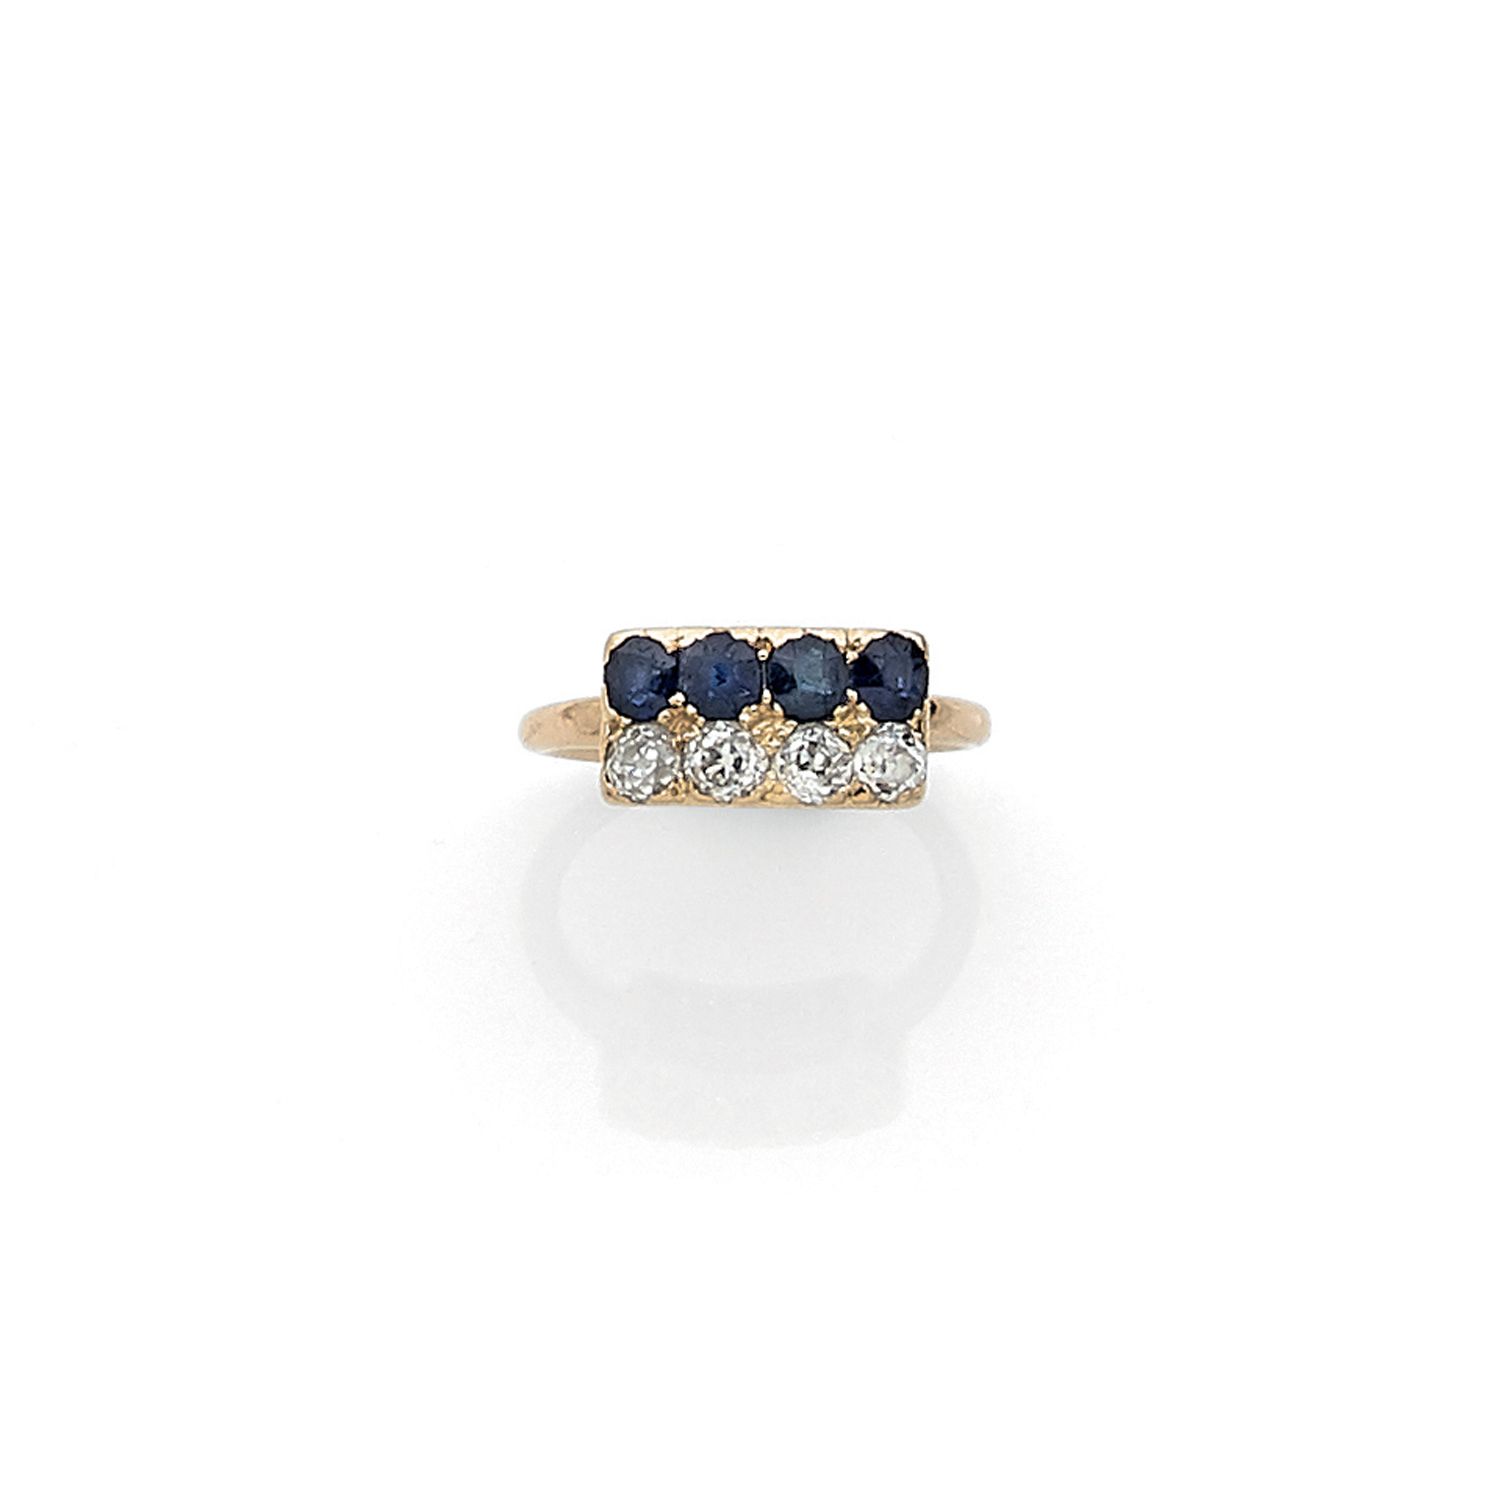 Null 一枚18K（750‰）黄金戒指，镶嵌着一排蓝宝石和一排圆钻。

梯度 : 51

毛重：3.8克